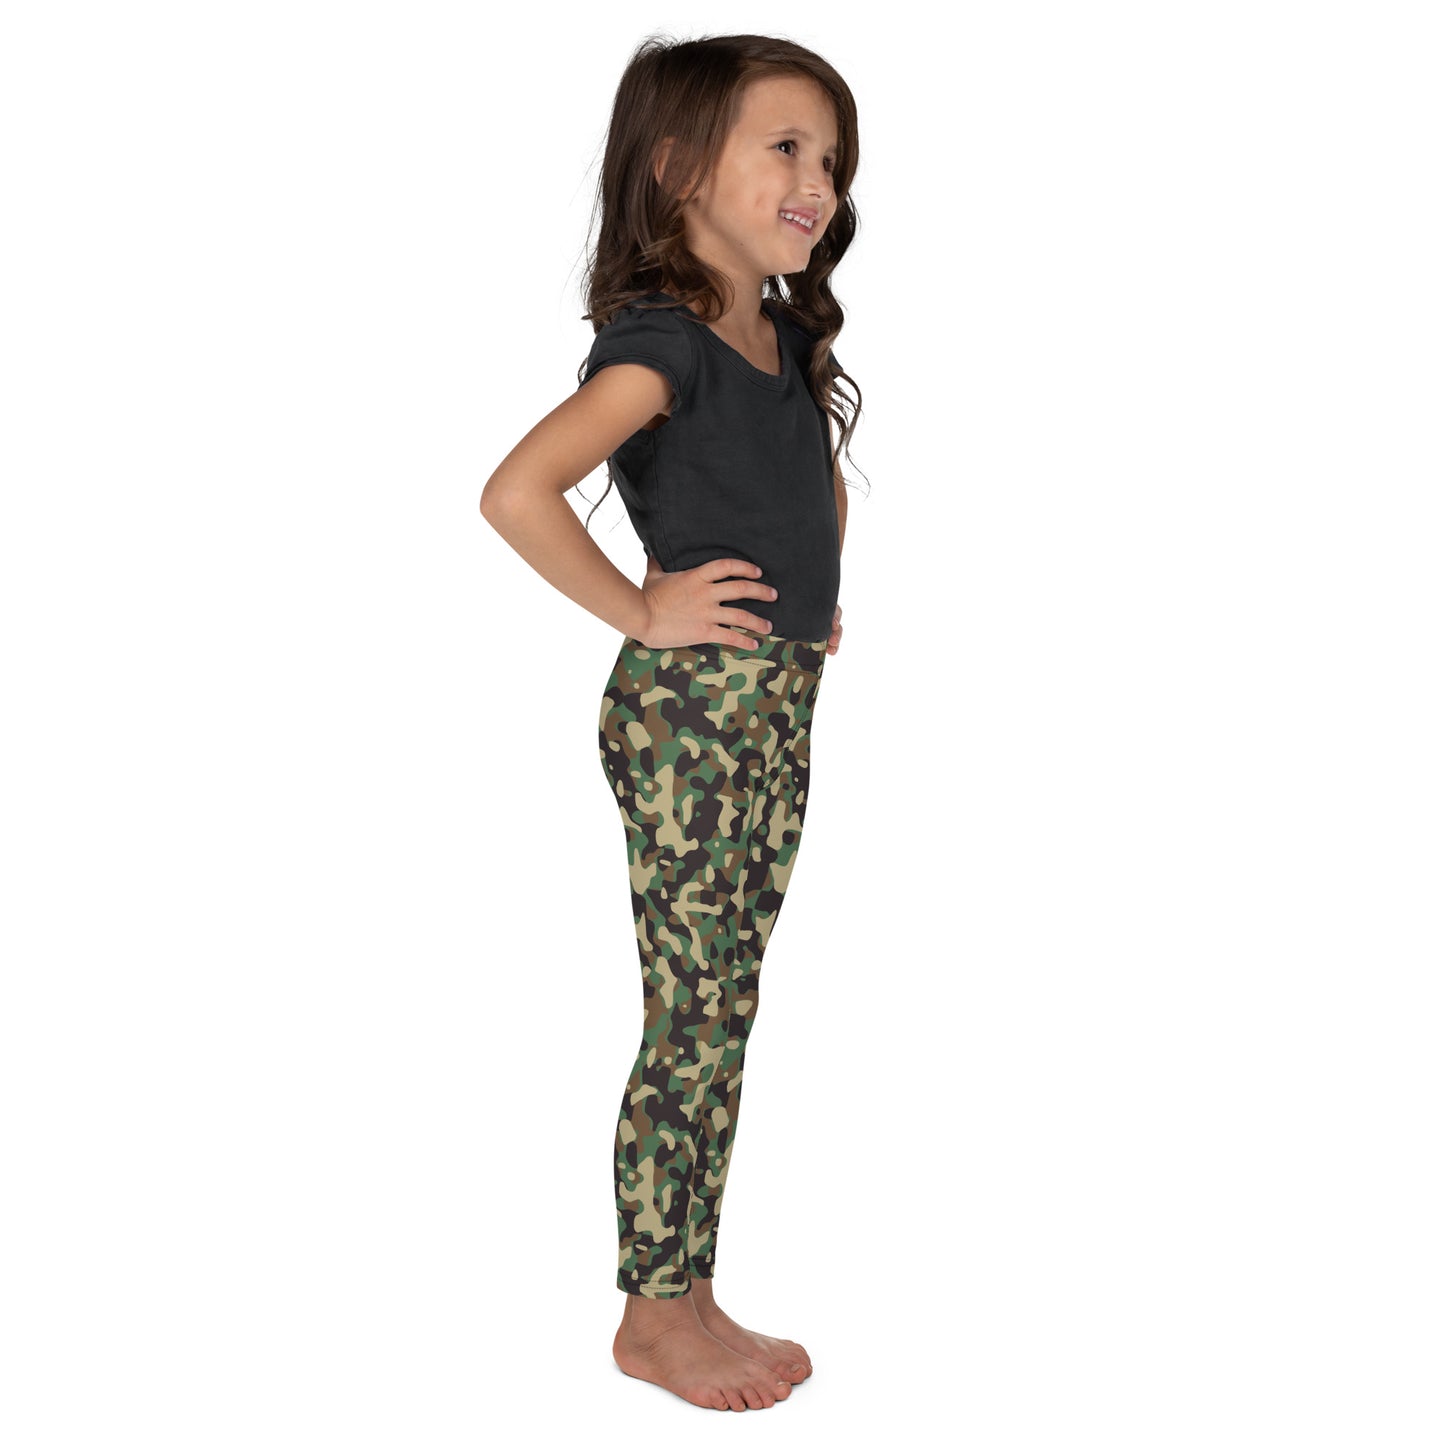 Kid's Leggings - Green & Tan Camouflage